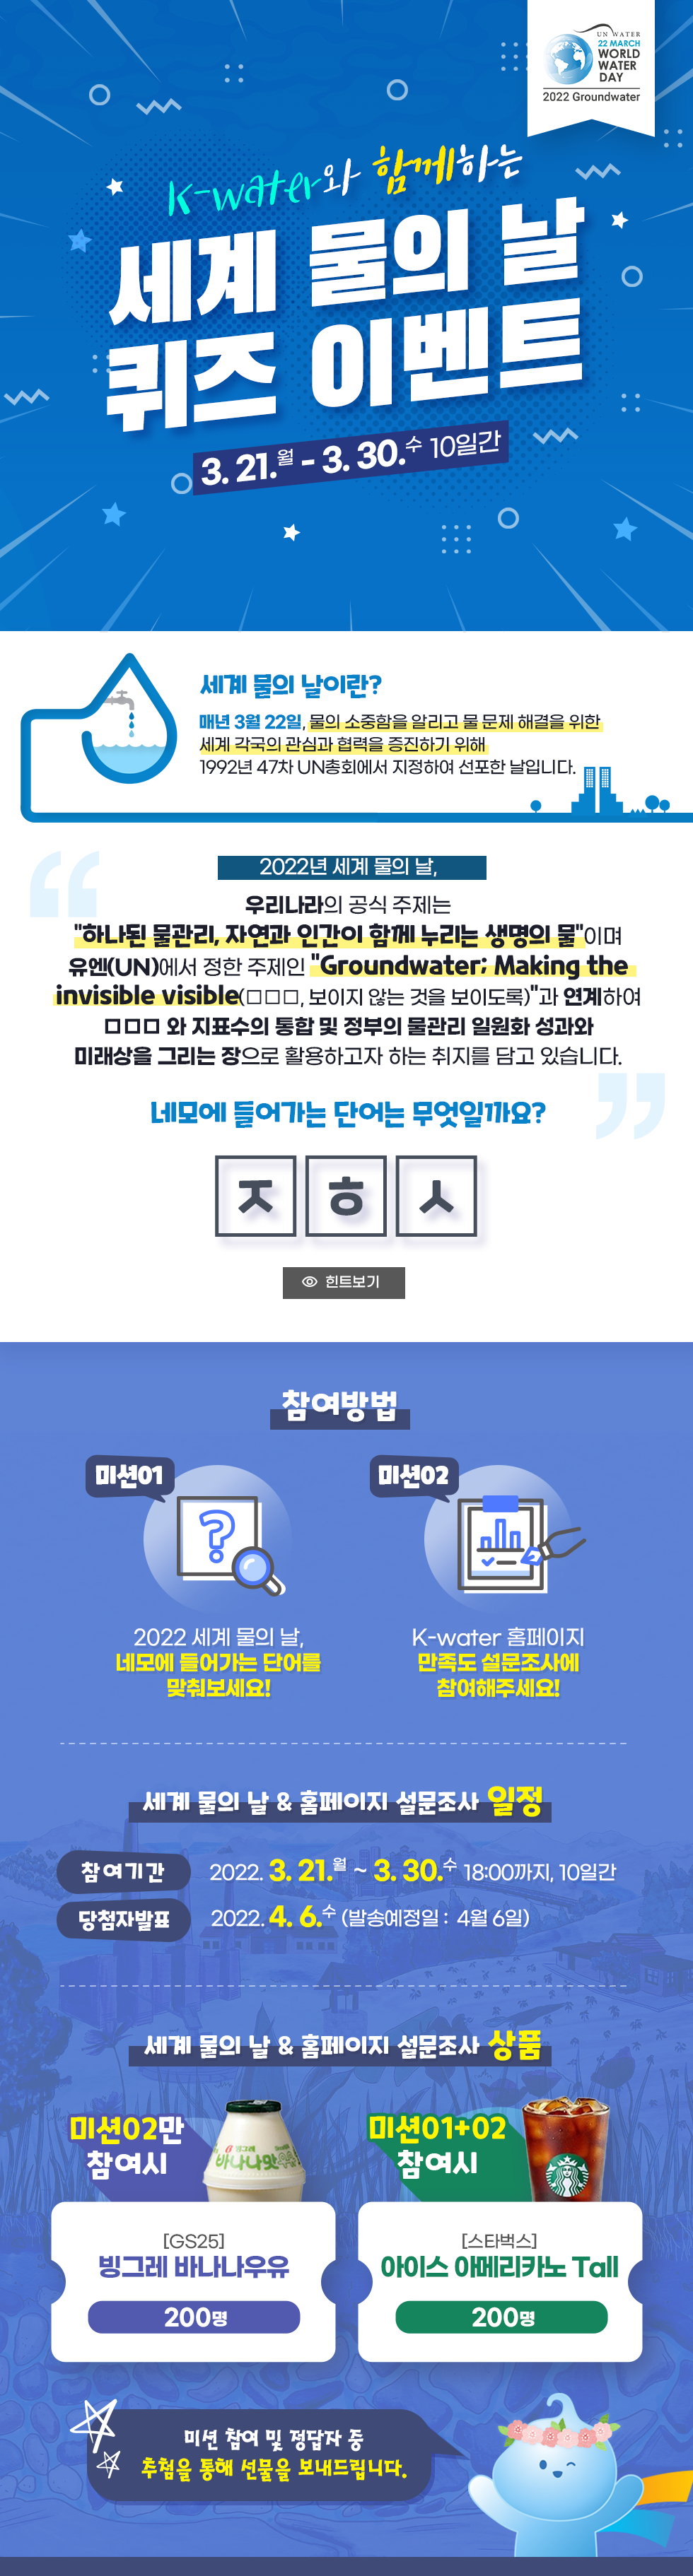 K-water와 함께하는 세계 물의 날 퀴즈 이벤트 3.21(월) ~ 3.30(수) 10일간 